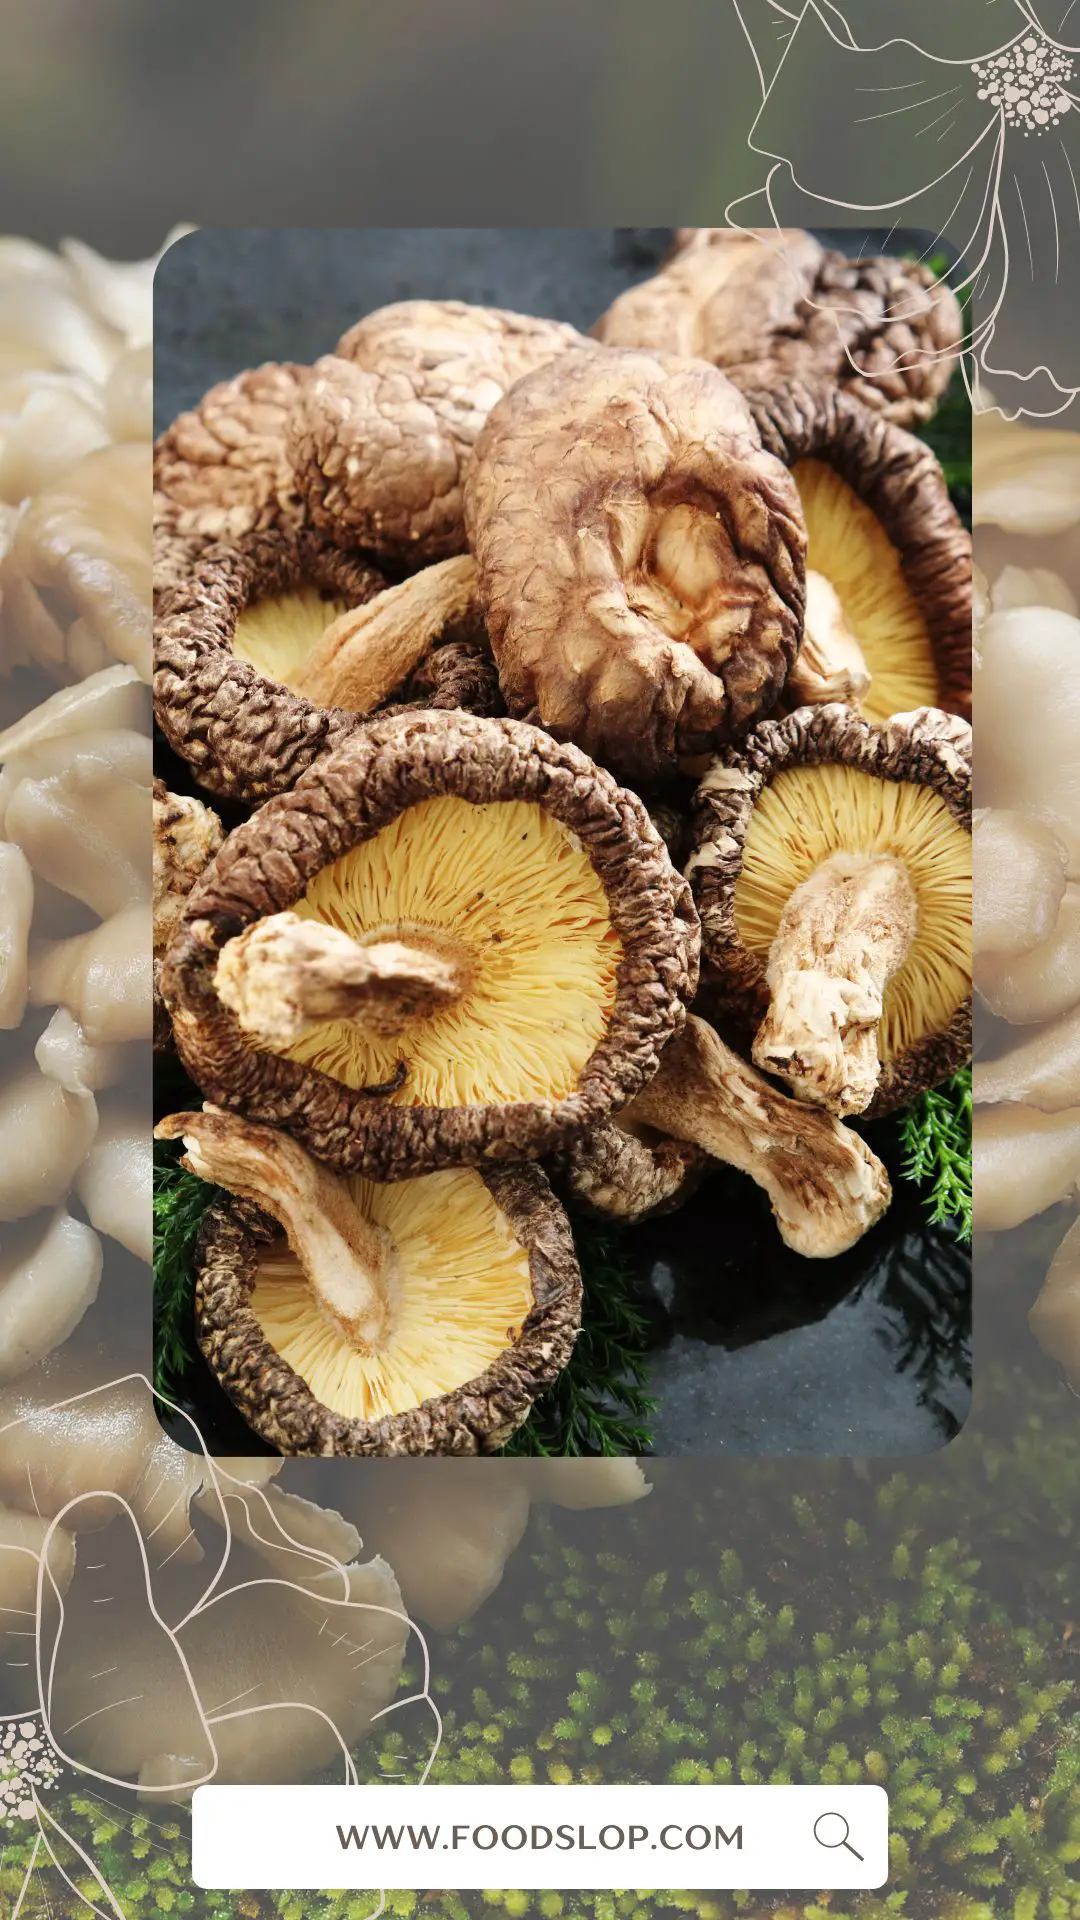 Why Am I Craving Shiitake Mushrooms